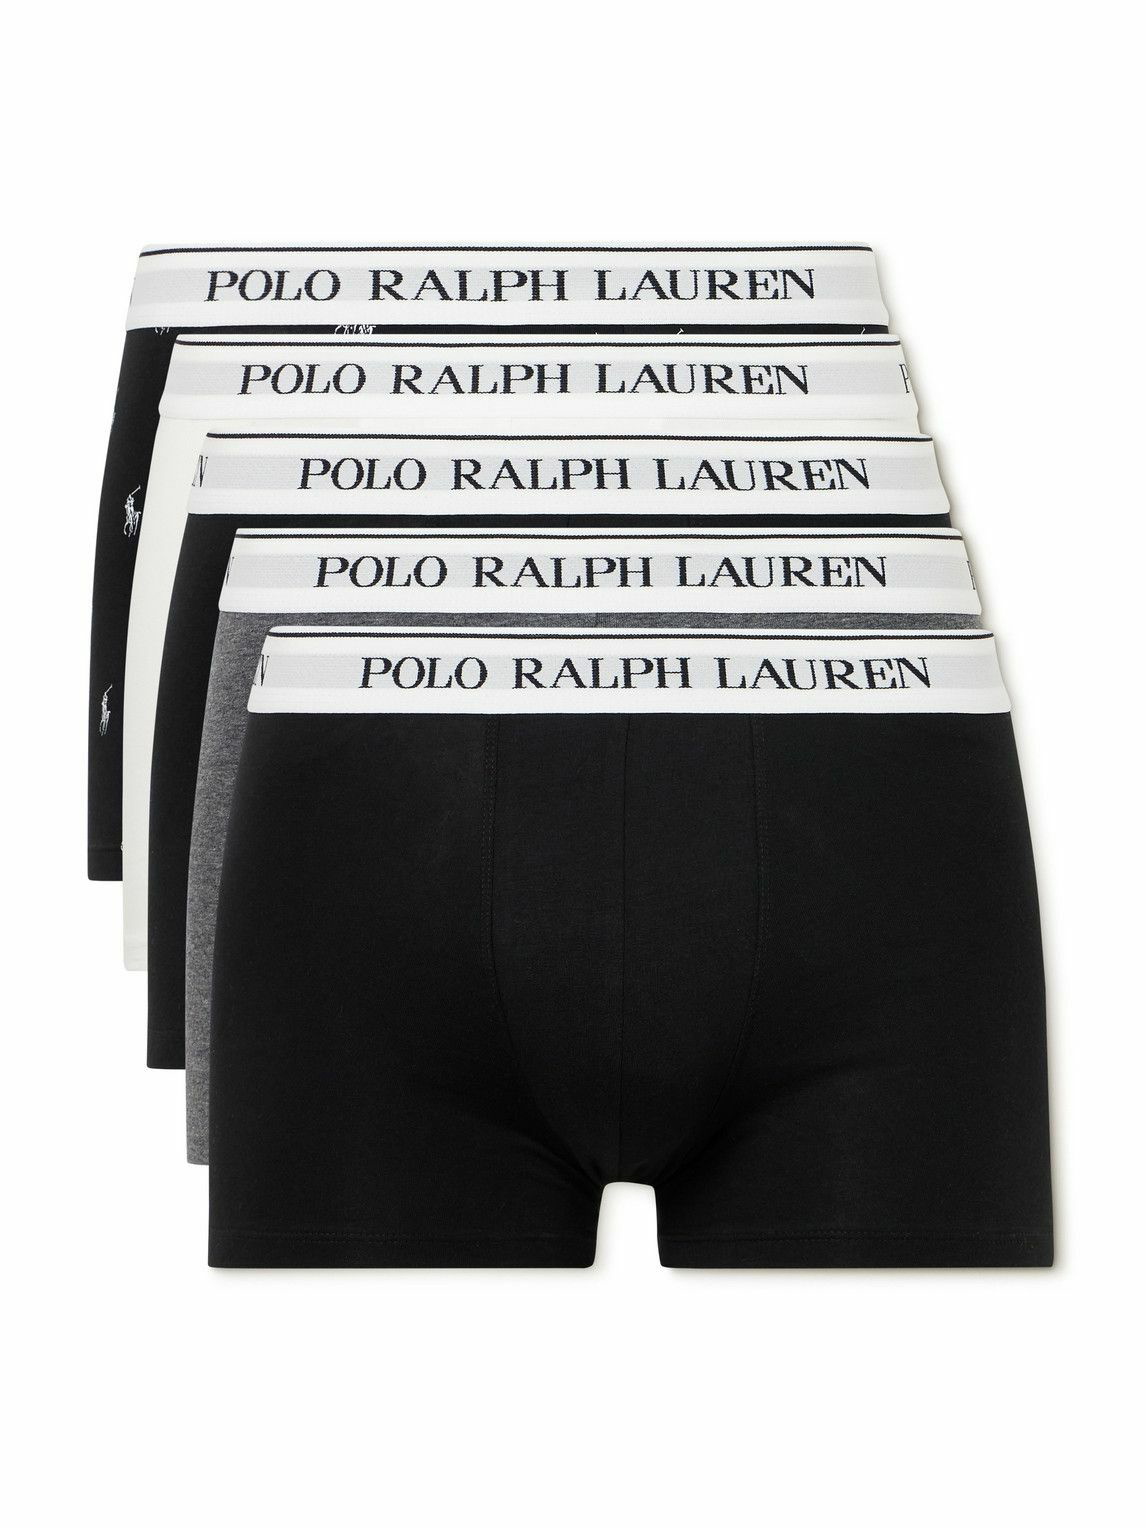 Polo Ralph Lauren Men's Classic Trunk - 3 Pack in Multi Polo Ralph